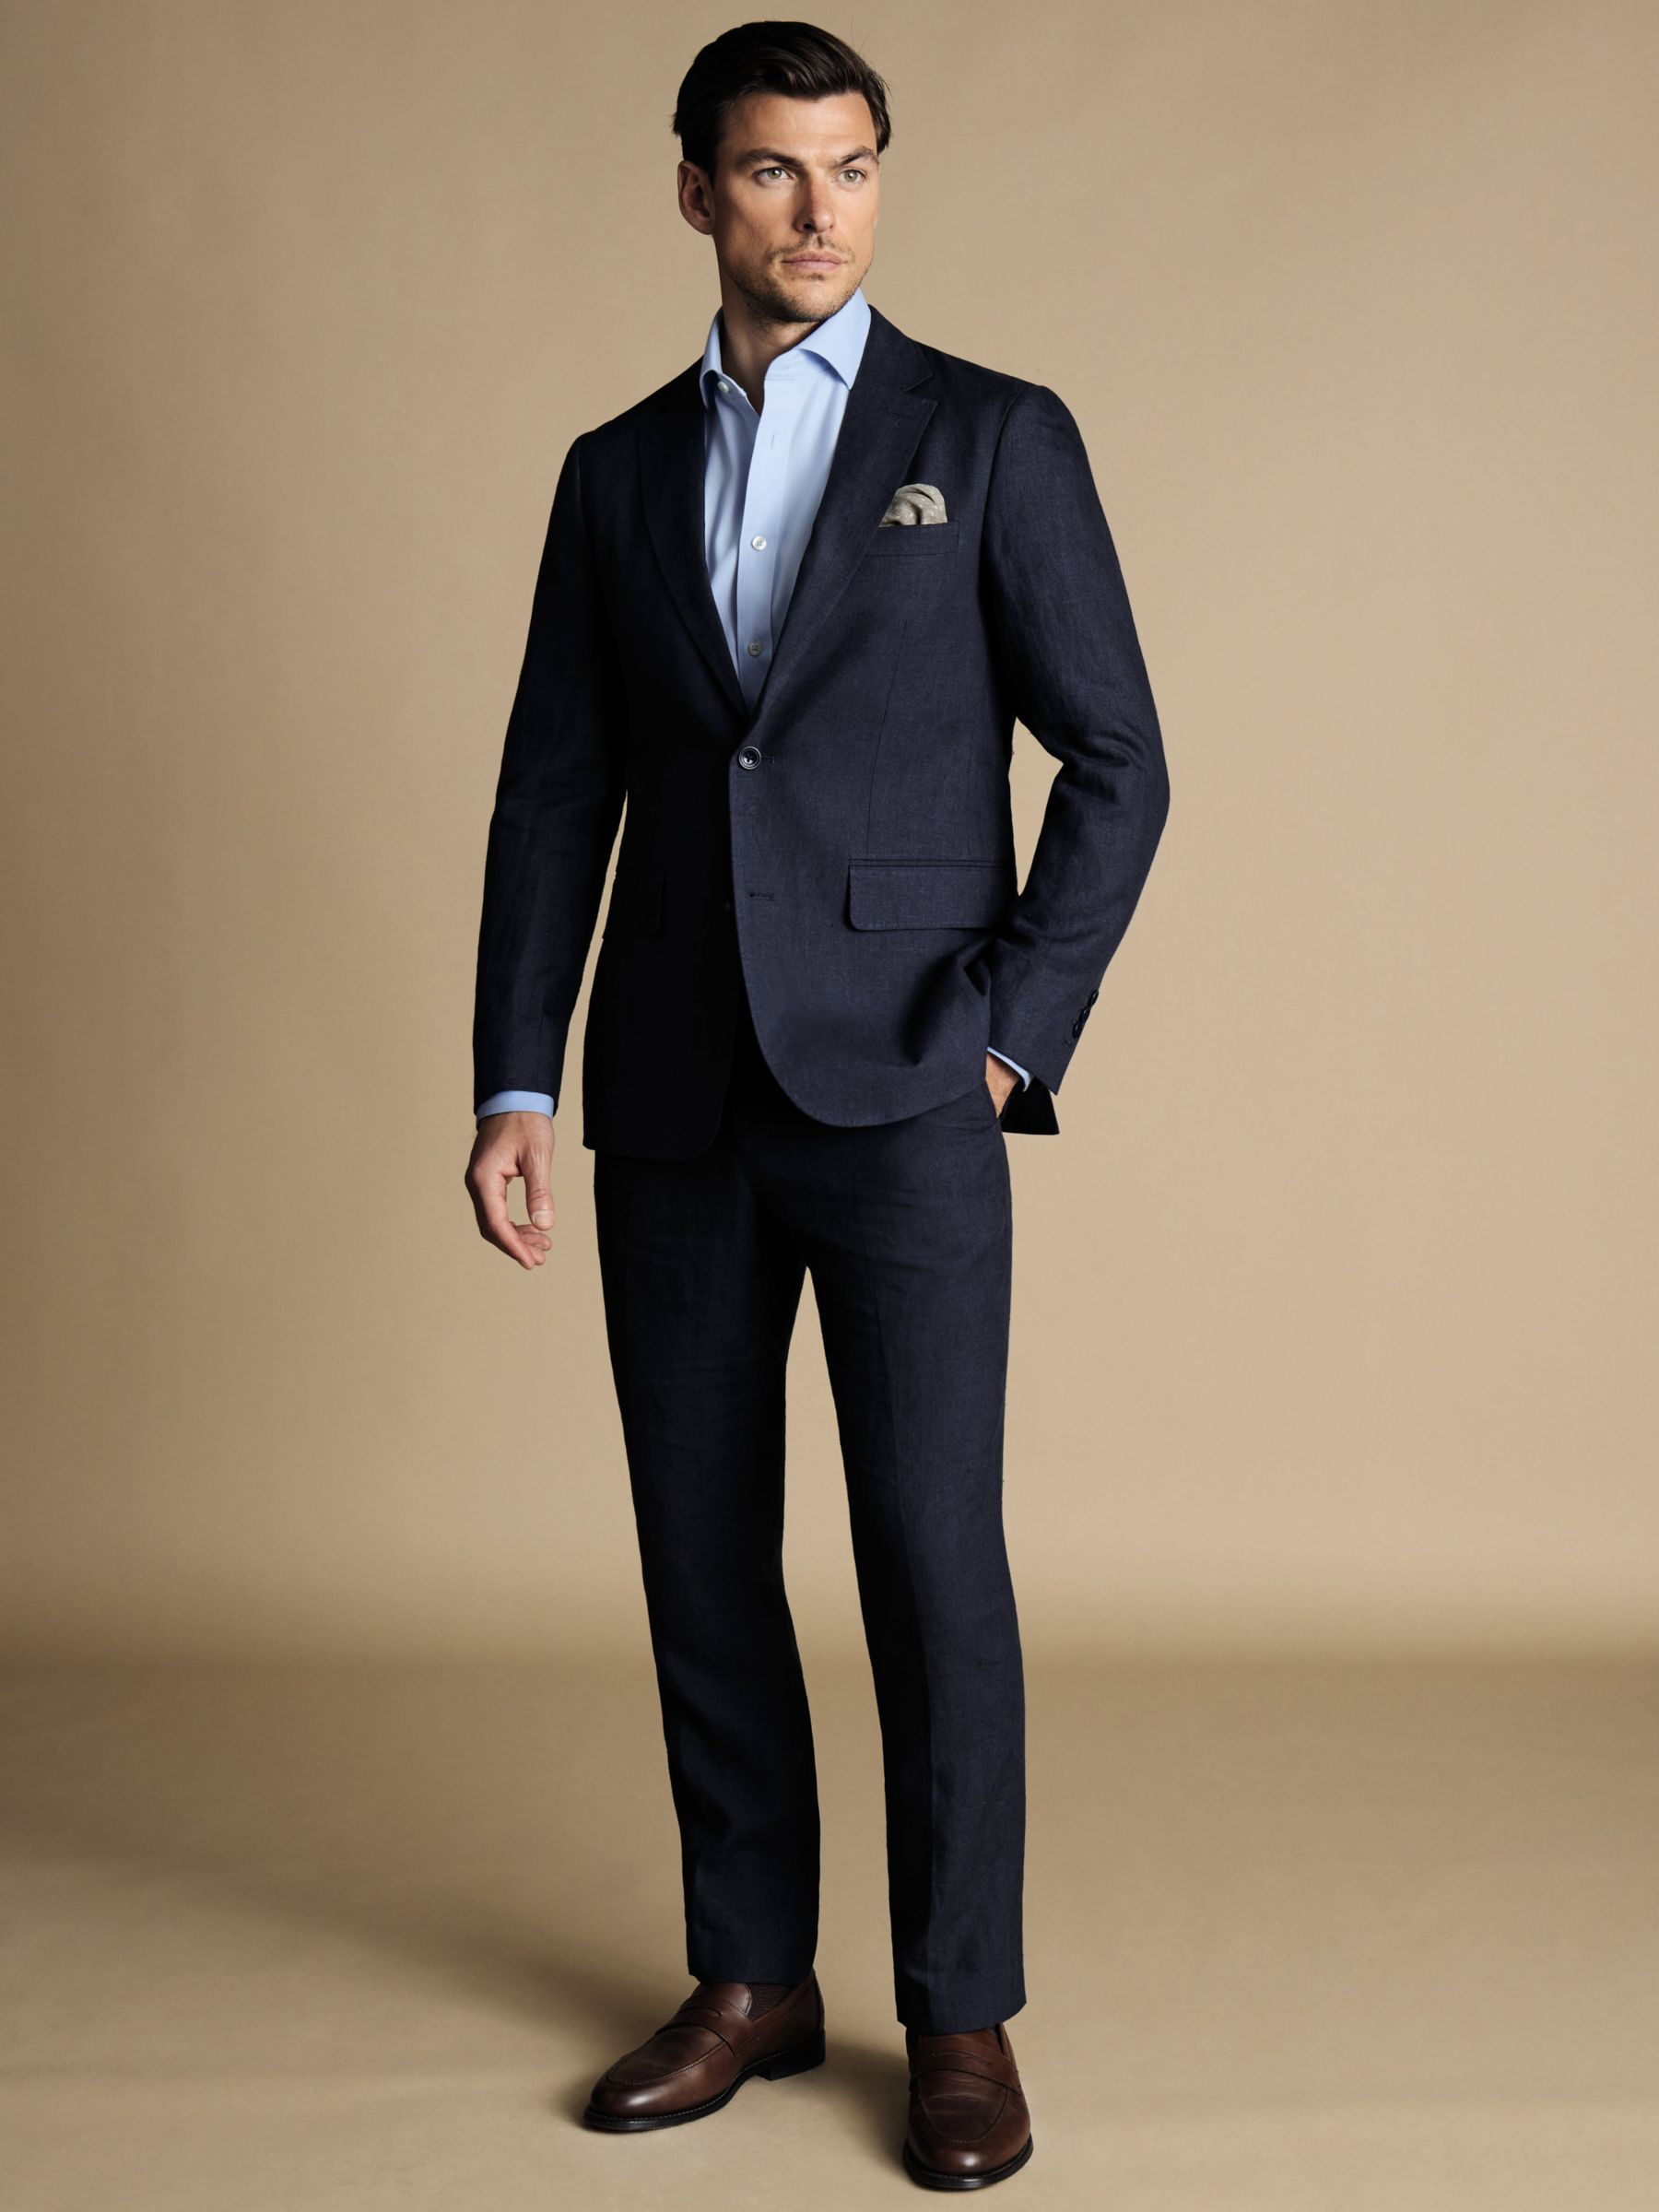 Charles Tyrwhitt Slim Fit Linen Suit Jacket, Dark Navy, 44R